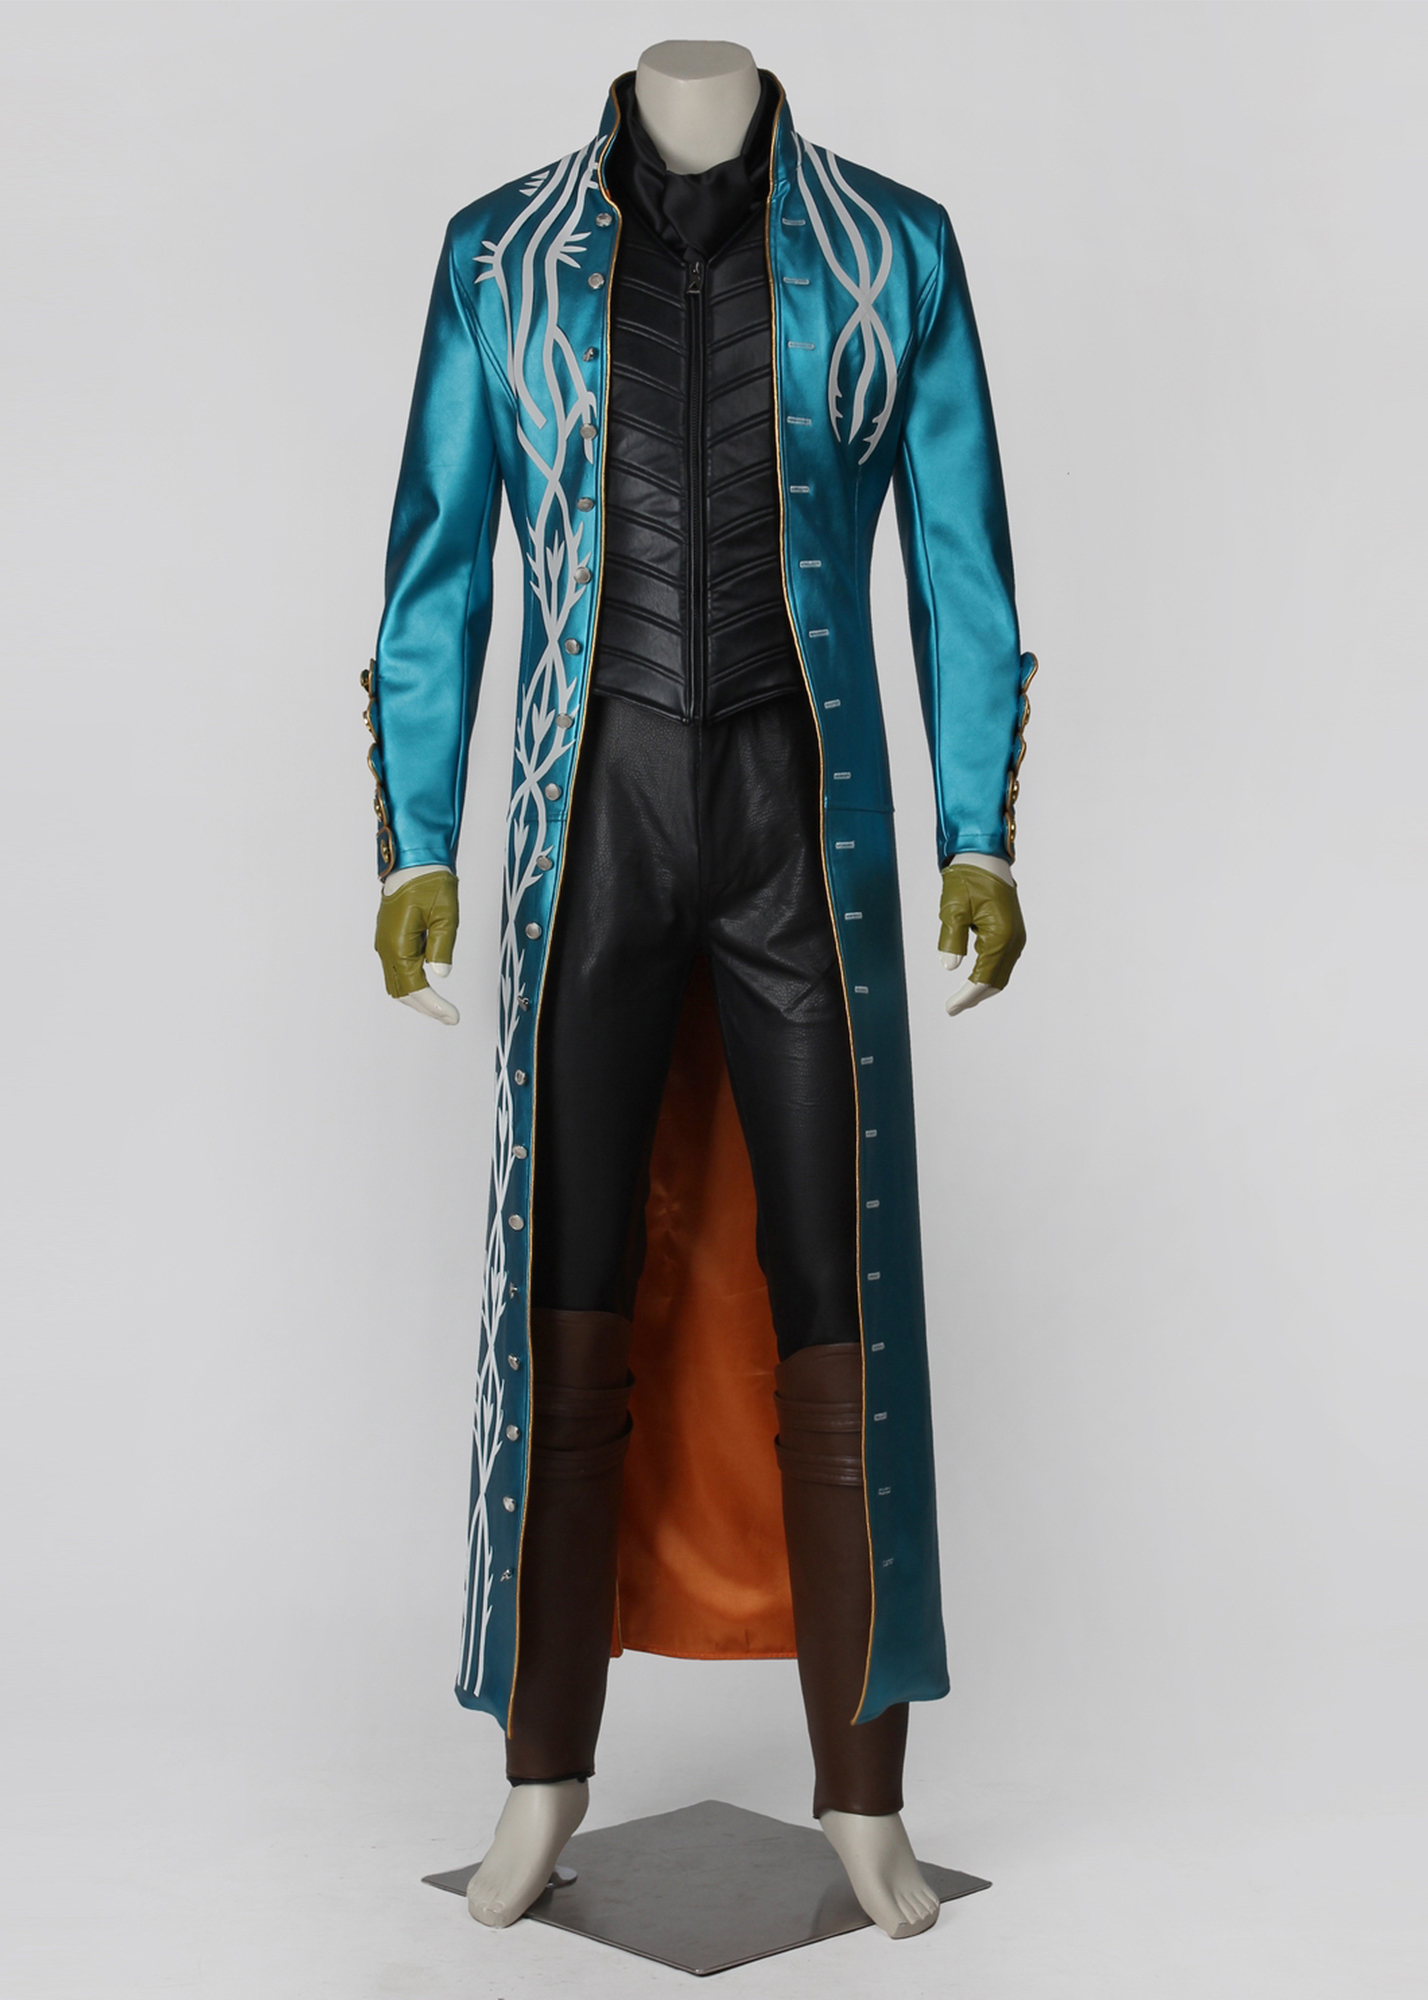 Vergil Costume Devil May Cry 3 Dante's Awakening Suit Cosplay